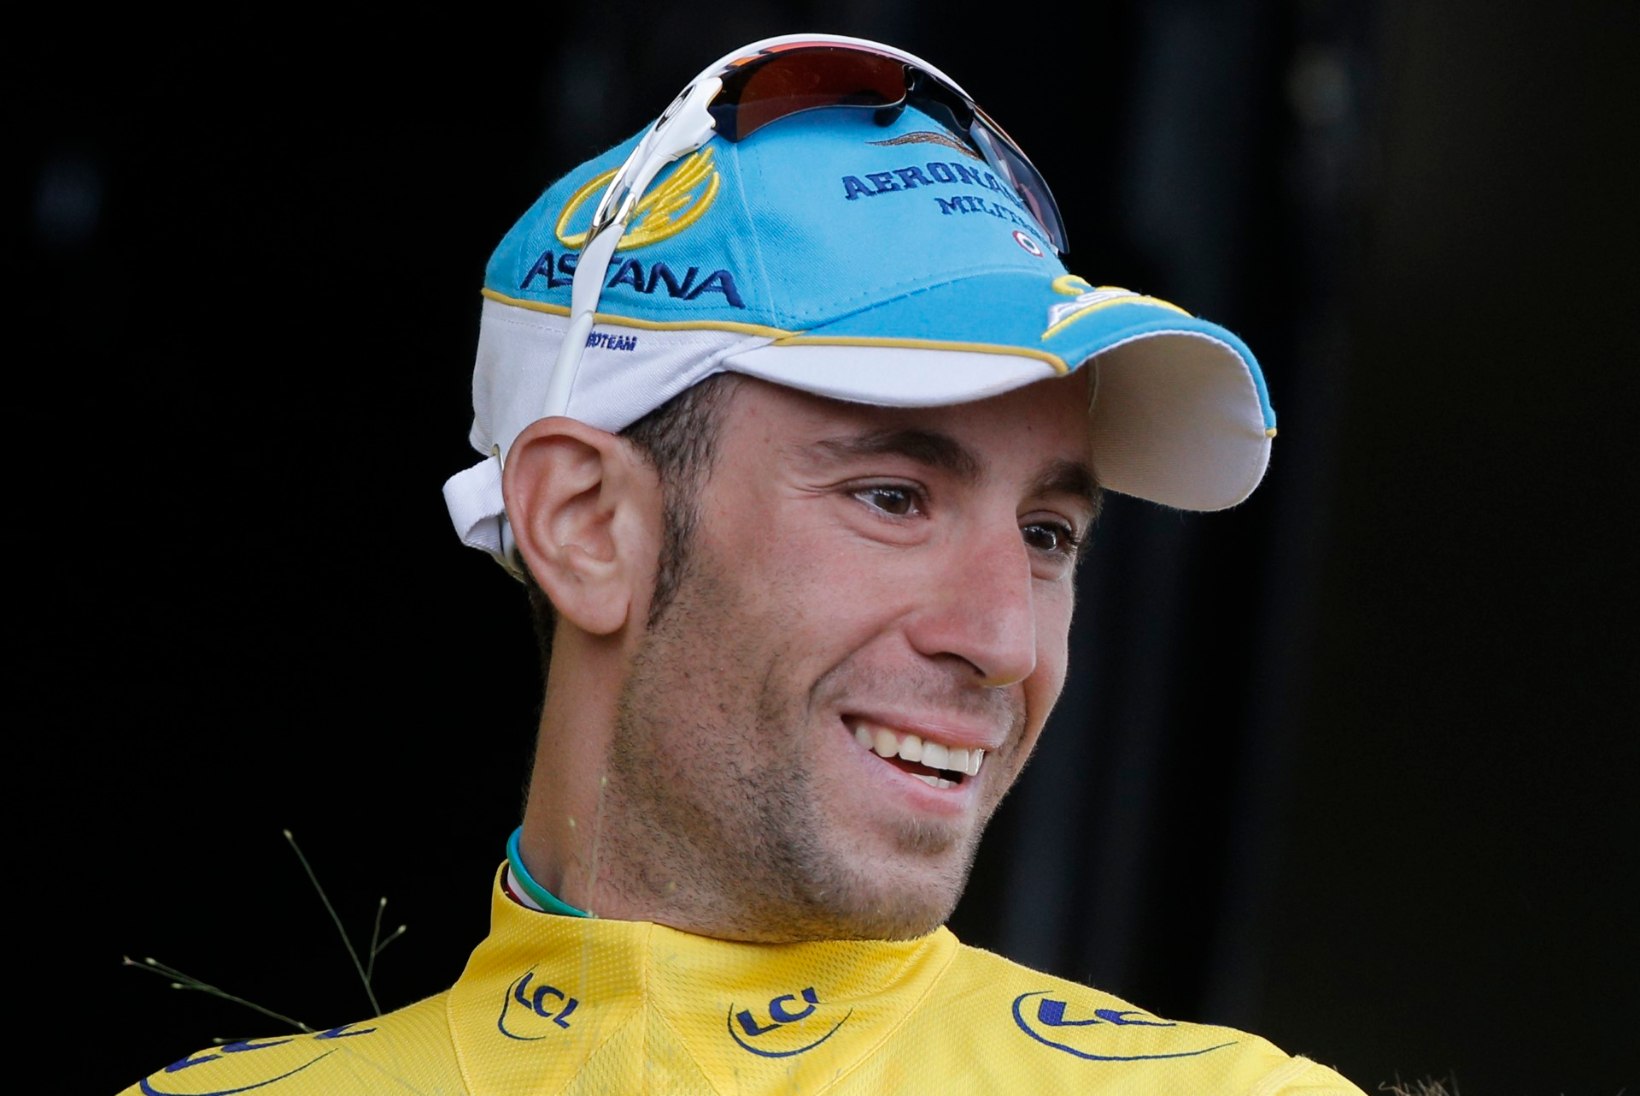 VIDEO: Tour de France'i katsevõitja sai lilleneiult korvi